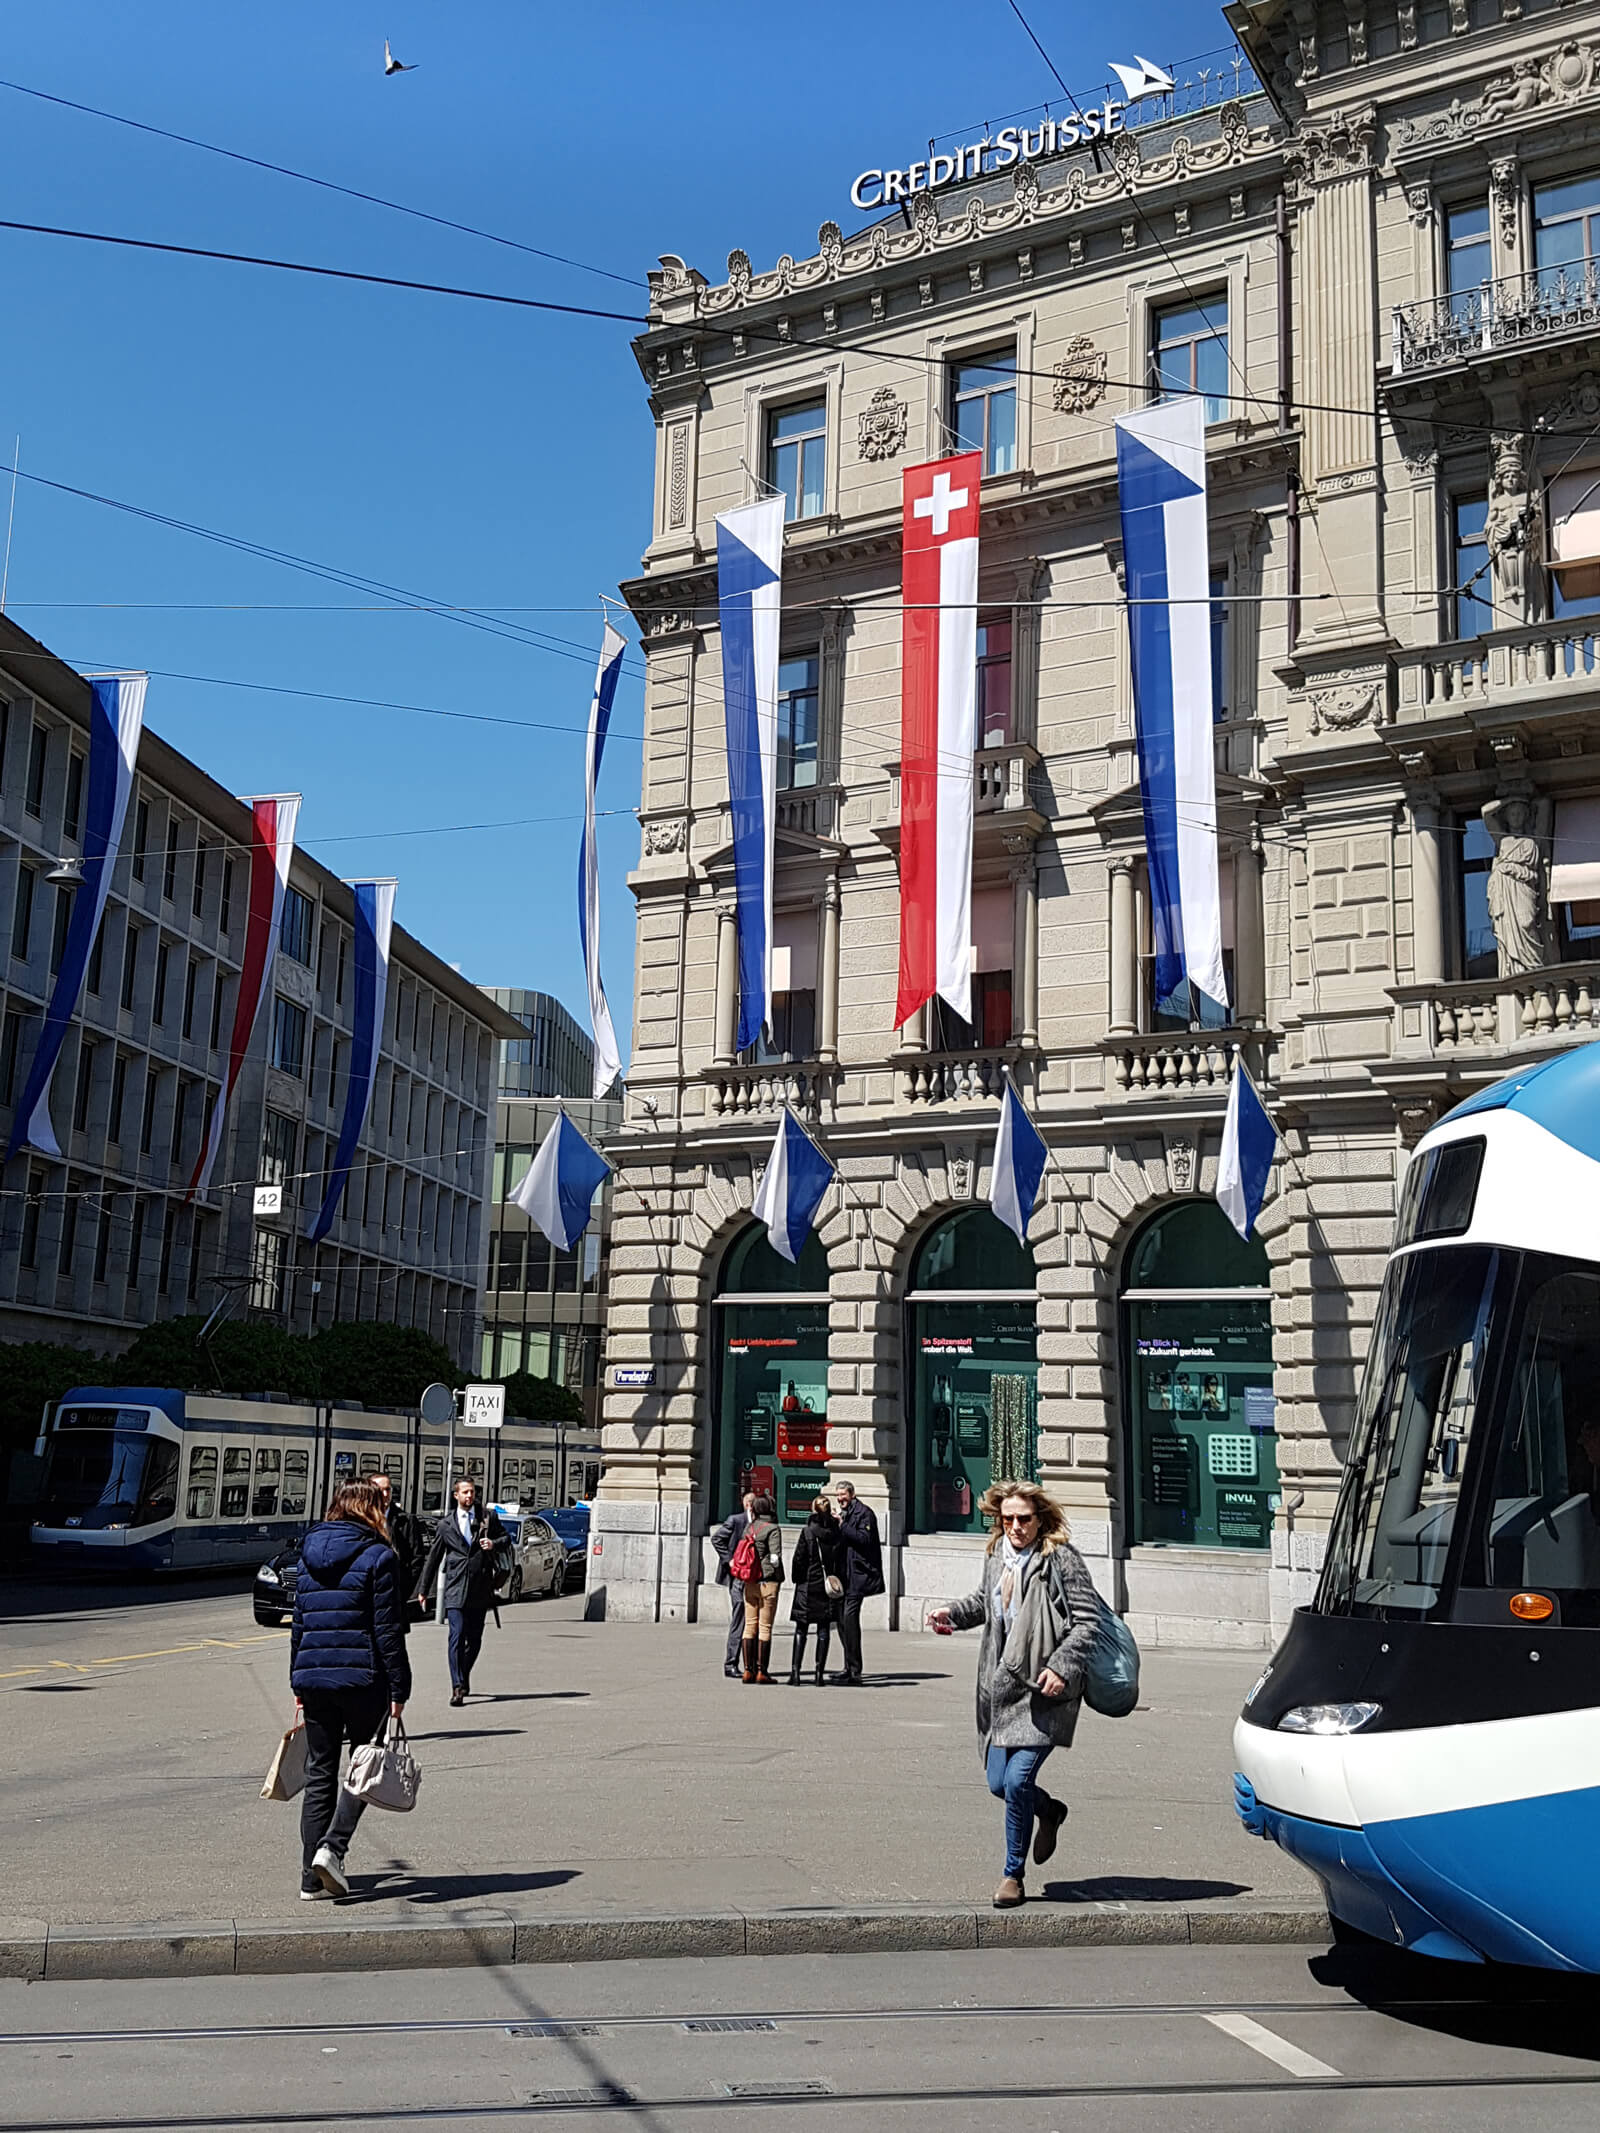 Credit Suisse at Paradeplatz in Zürich